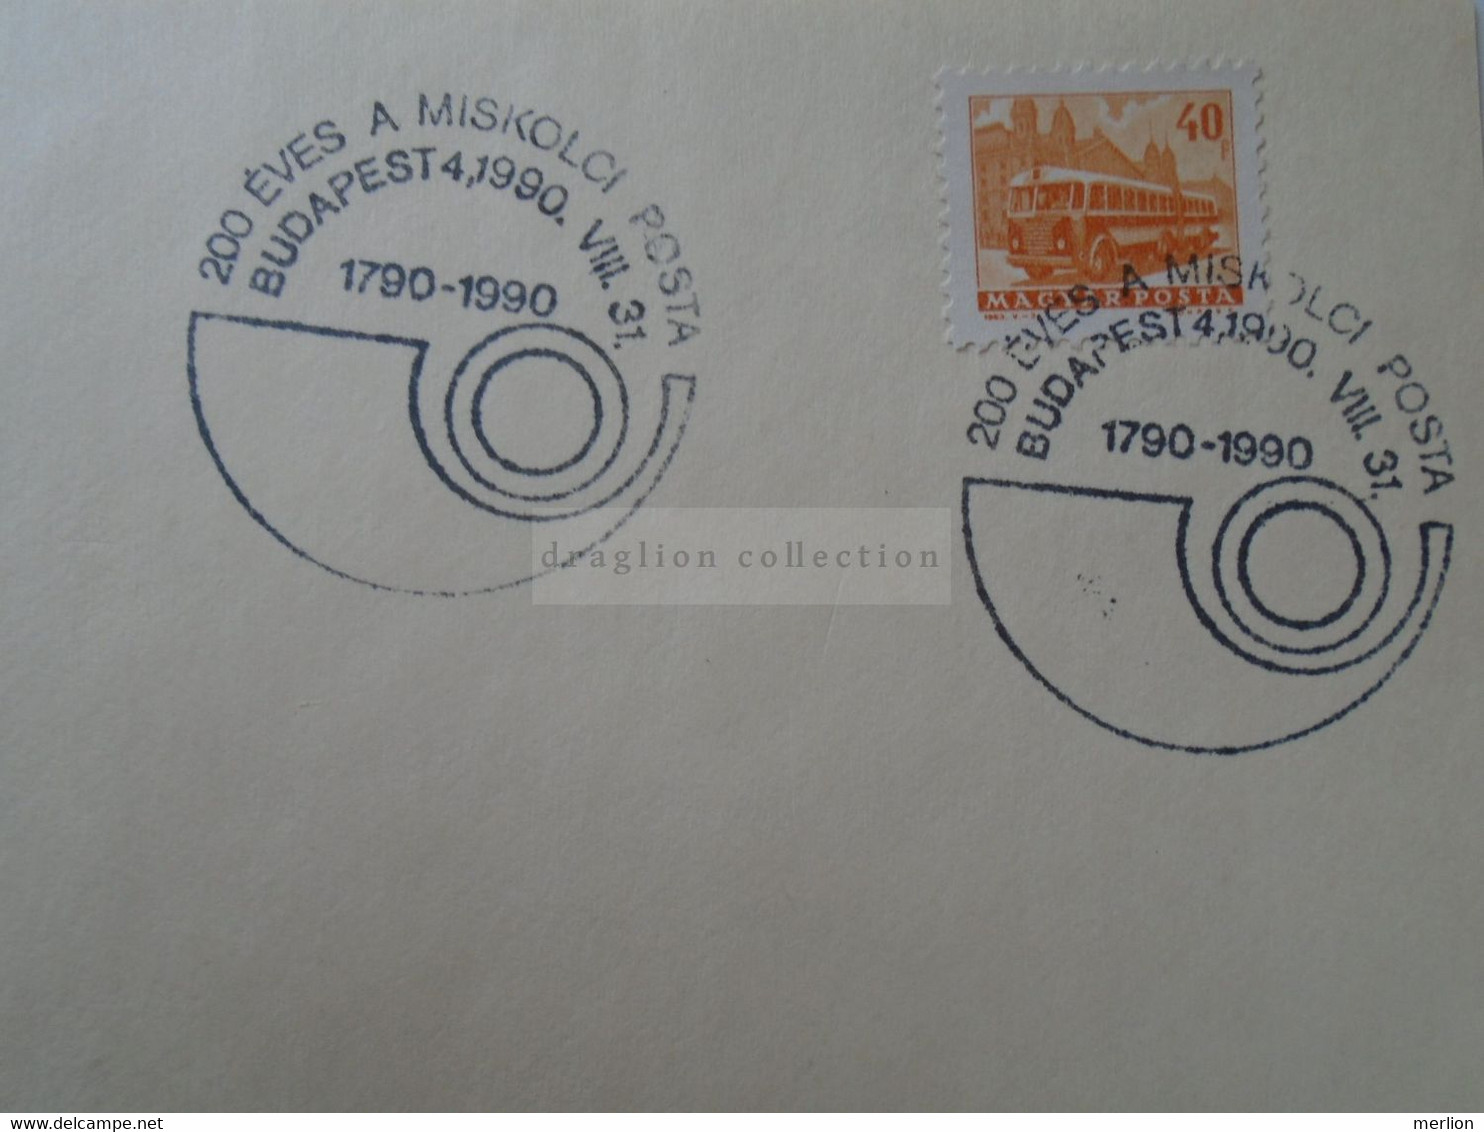 D187084   HUNGARY  Postmark     MAGYAR POSTA   - Hungarian Post - 200 éves  A Miskolci Posta  1790-1990 - Postmark Collection